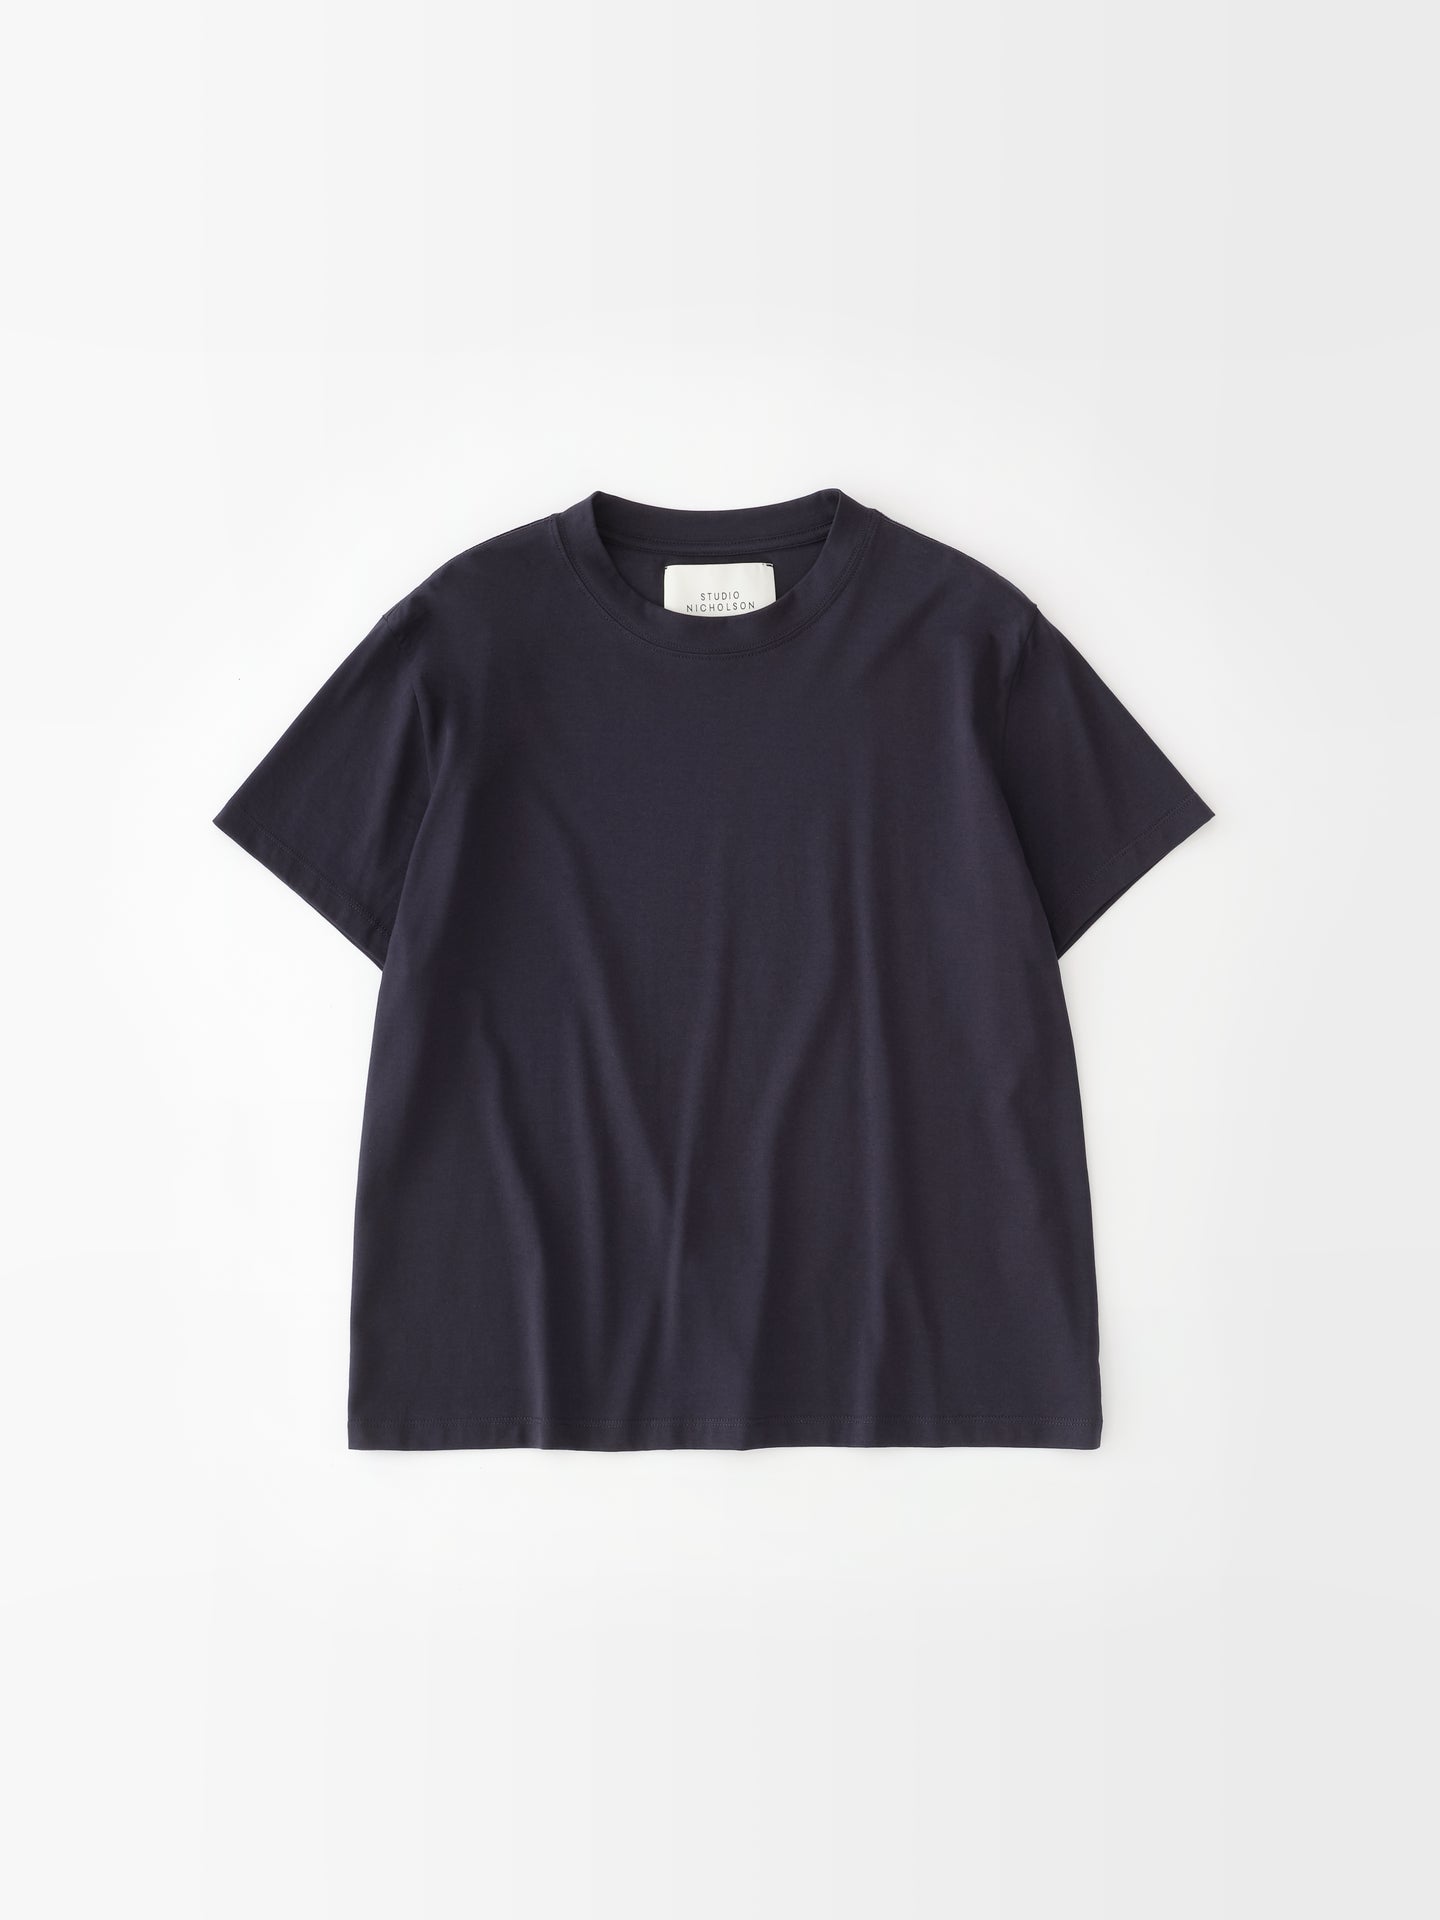 Women's T-Shirts | Classic Wardrobe Staples | Minimal T-Shirts